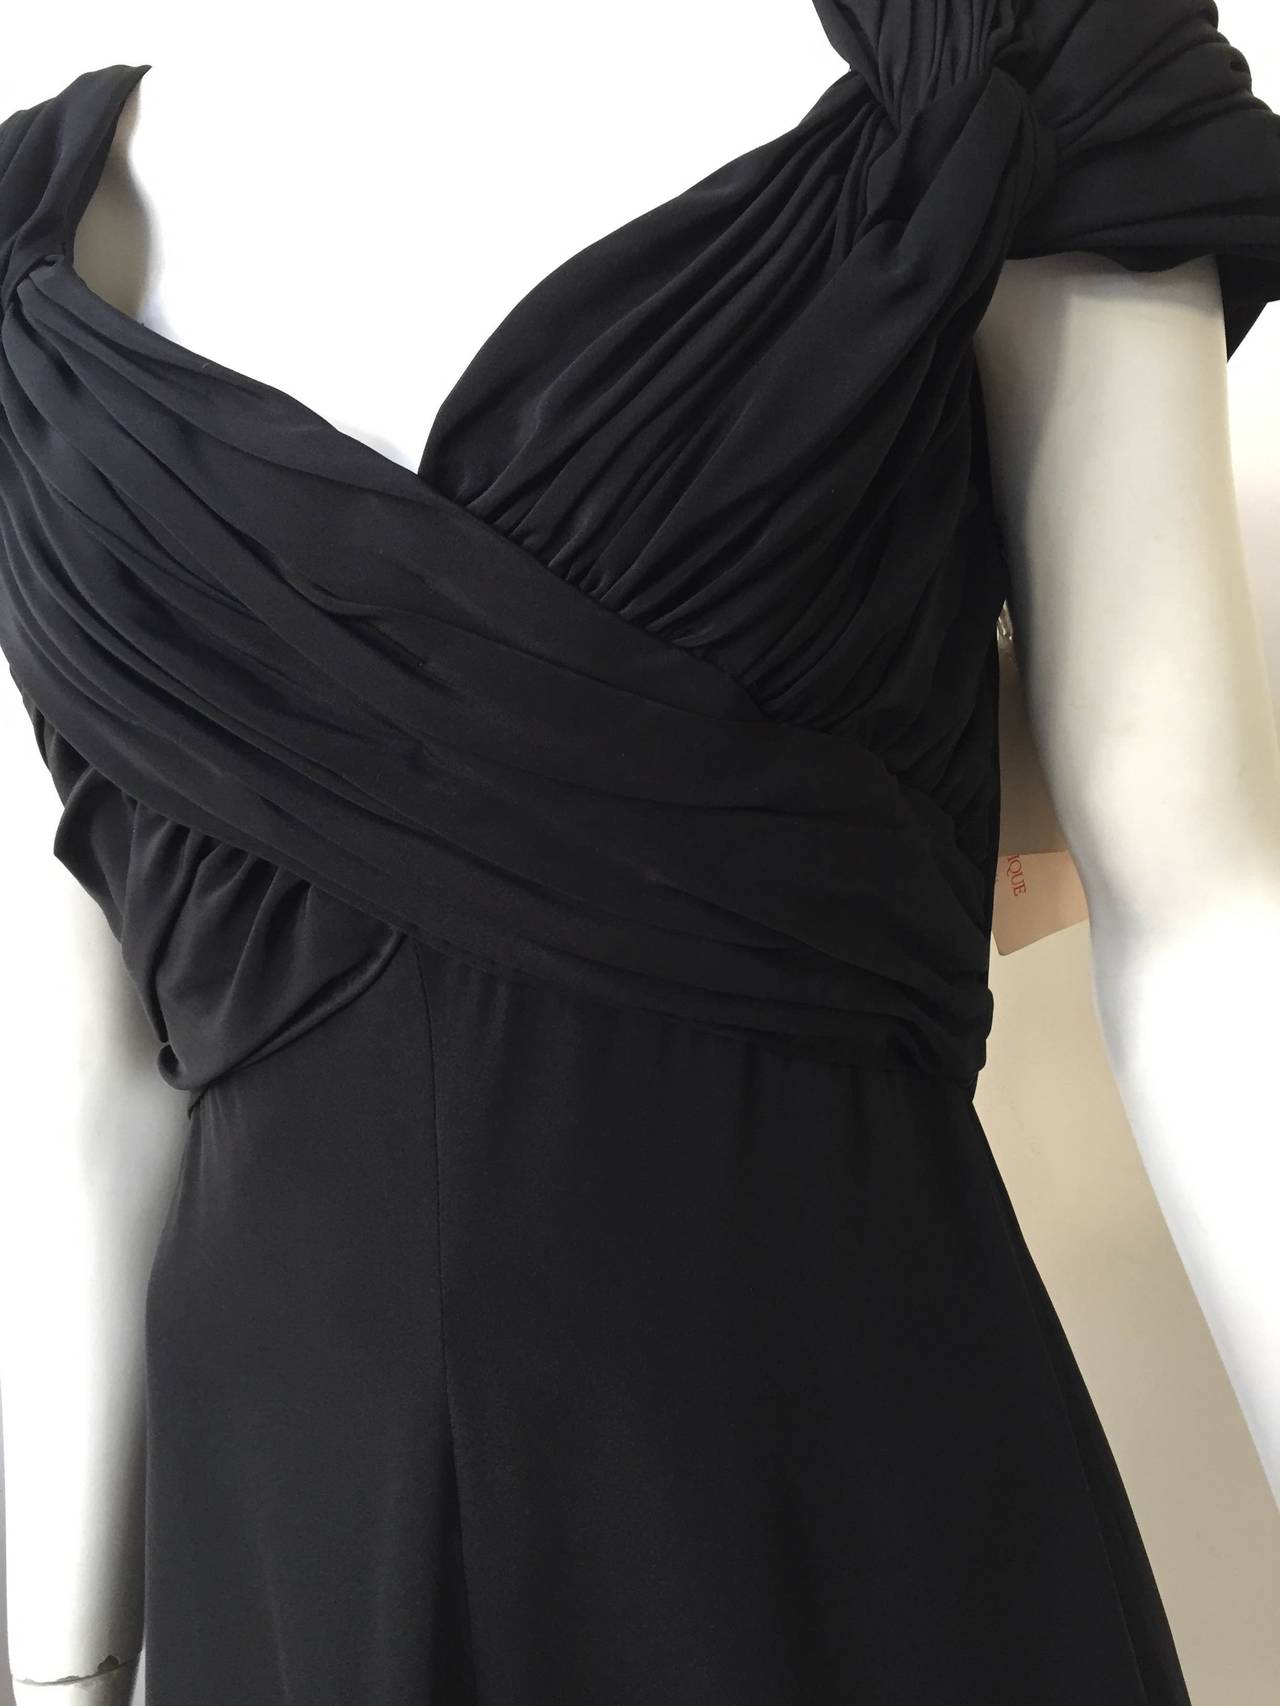 Scaasi 80s black silk dress never worn size 6. 1